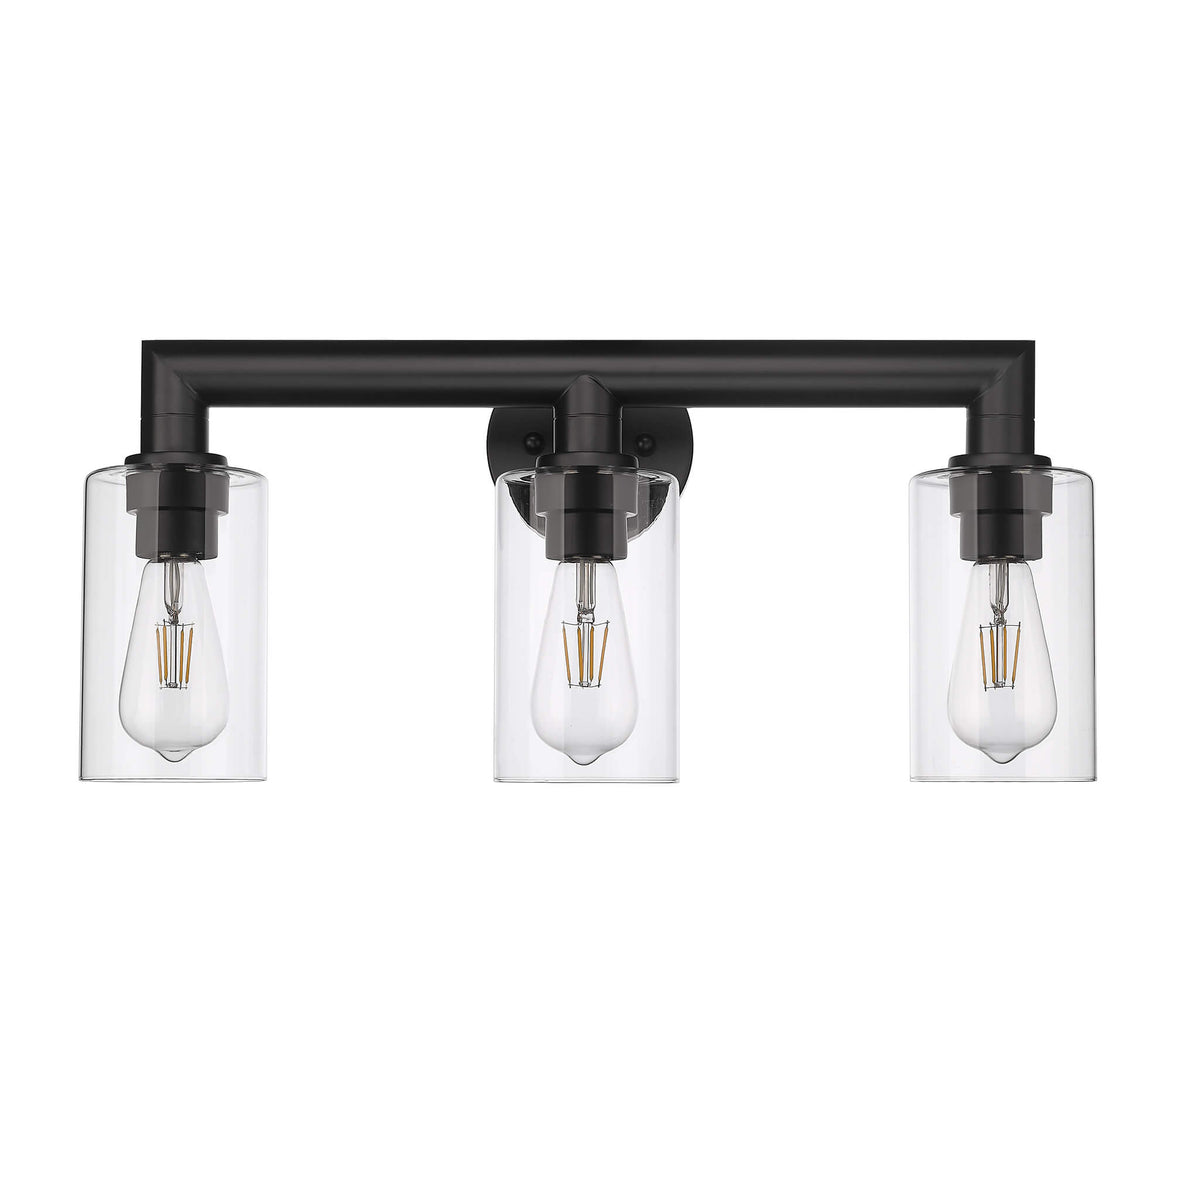 Modern black vanity light fixtures with 3 light - Vivio Lighting